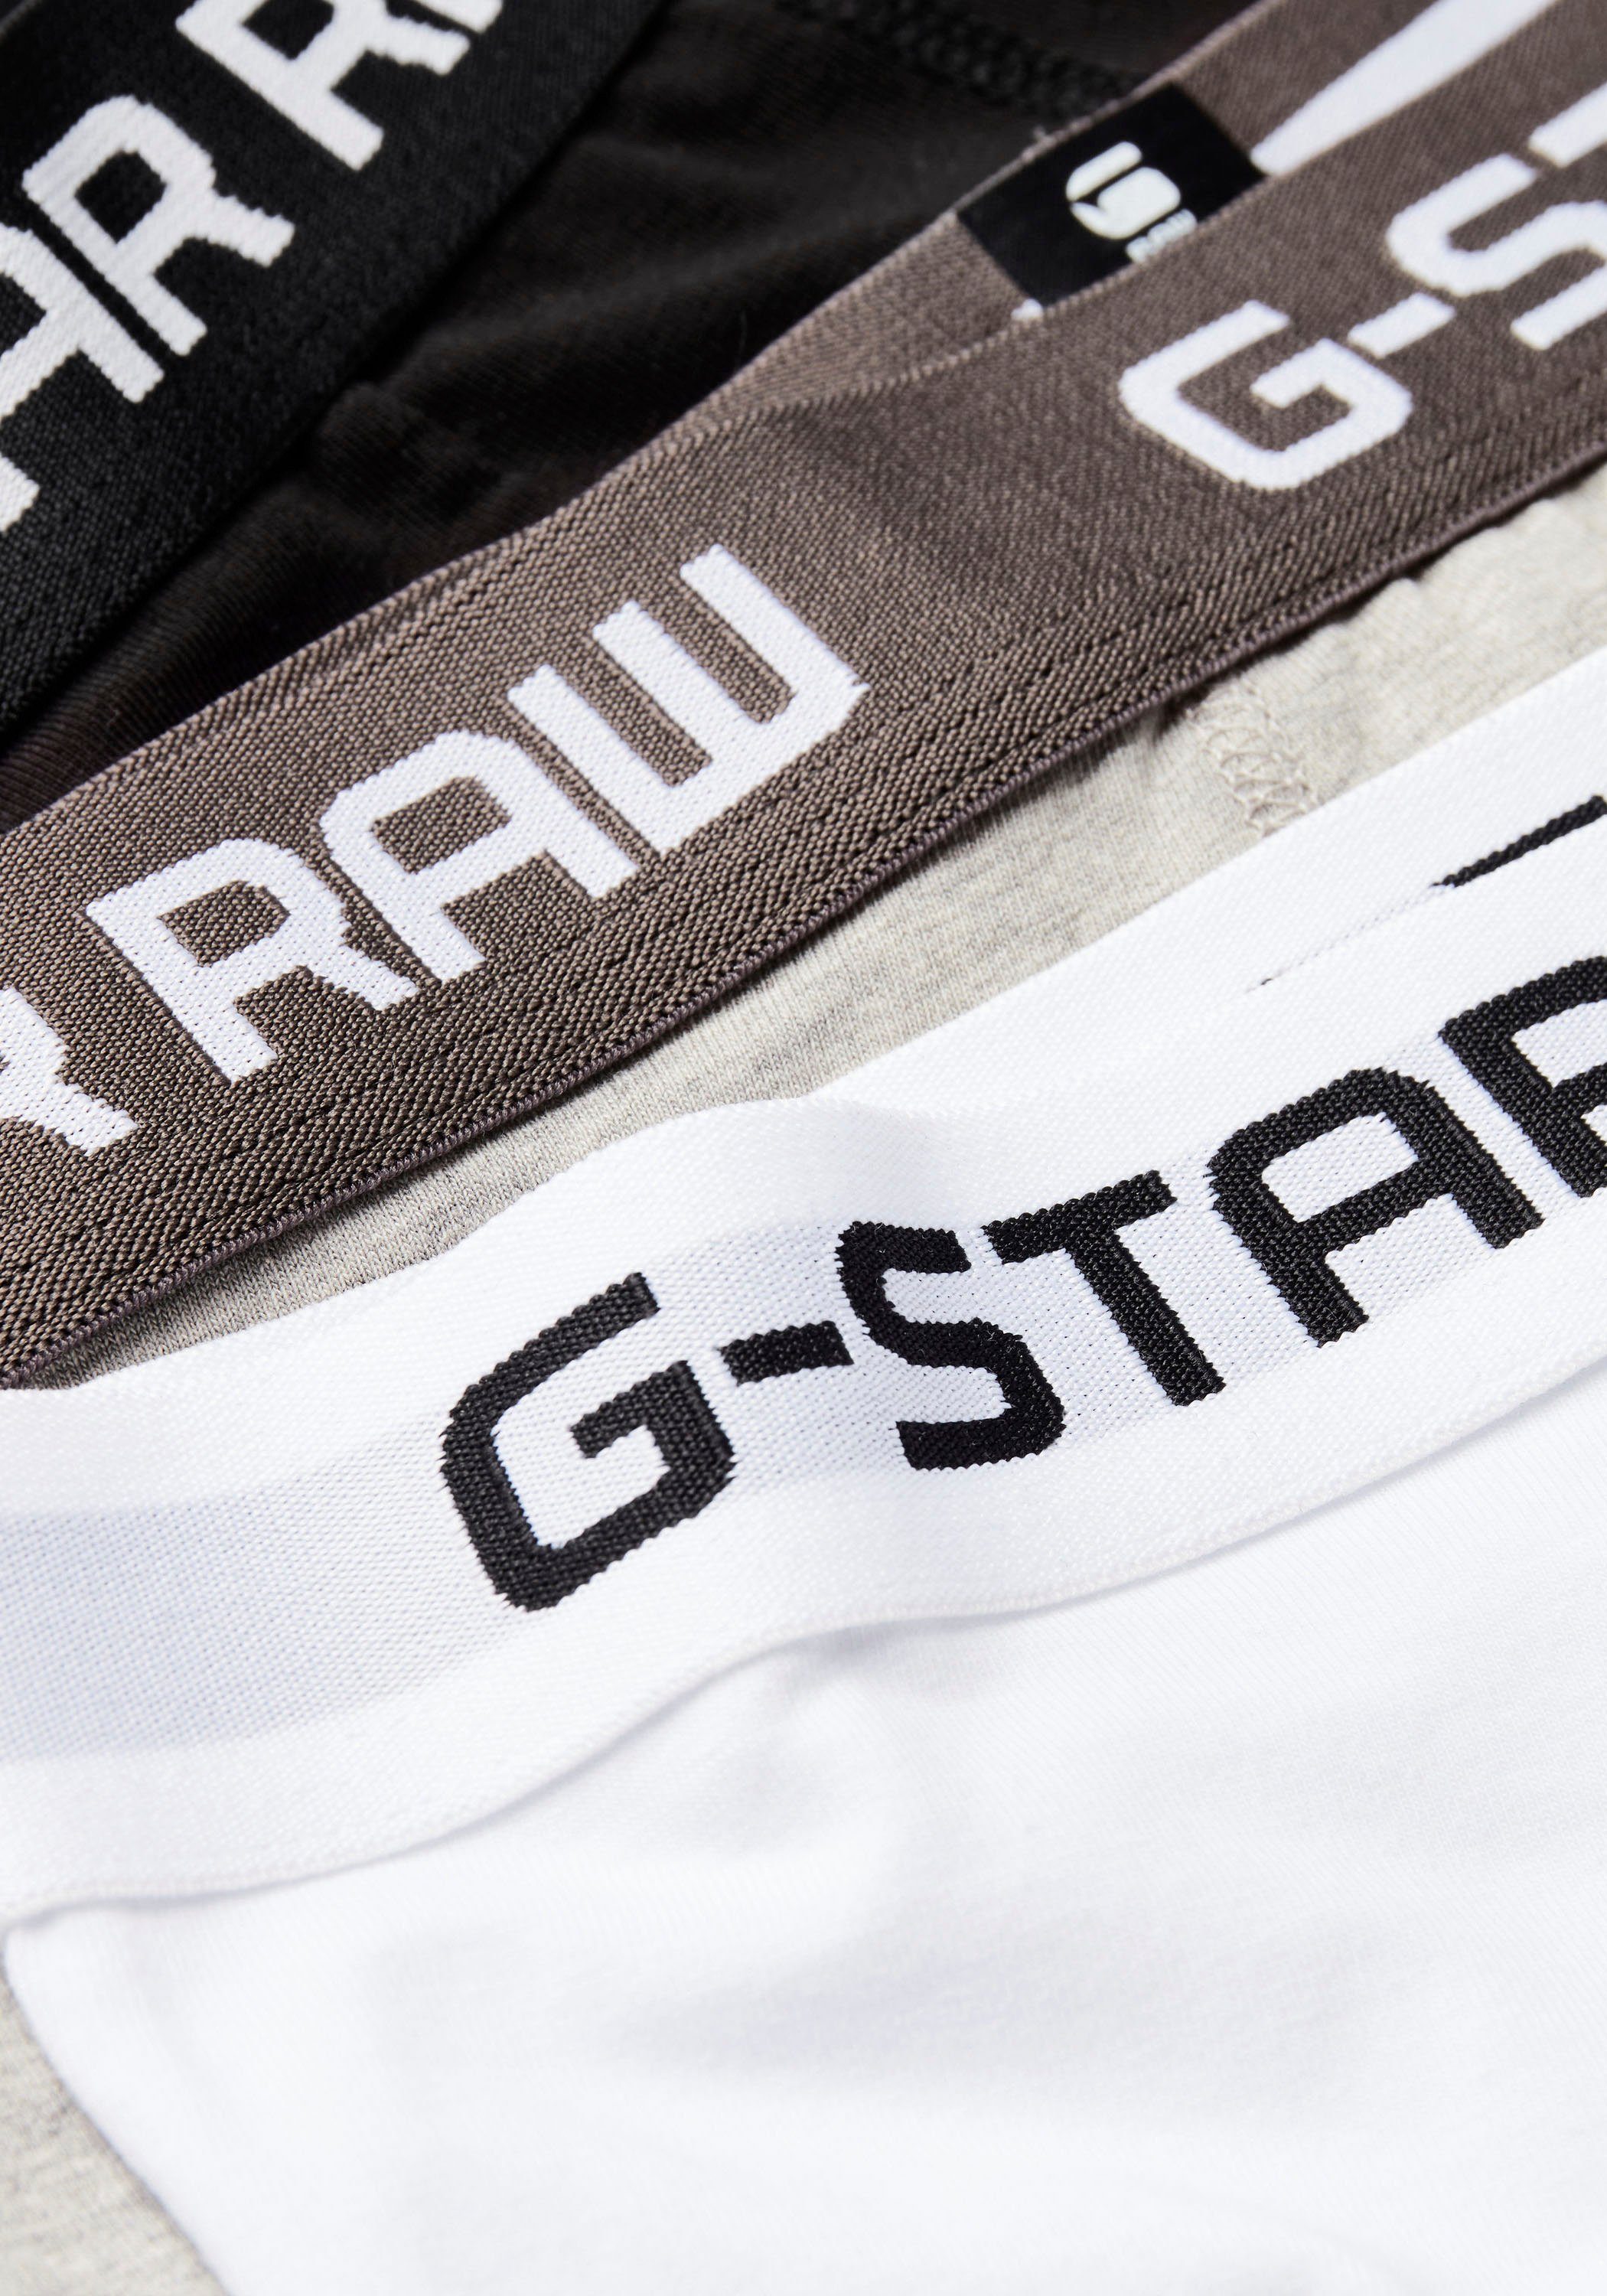 pack 3-St., 3er-Pack) Classic weiß, trunk grau-meliert RAW G-Star (Packung, schwarz, Boxer 3